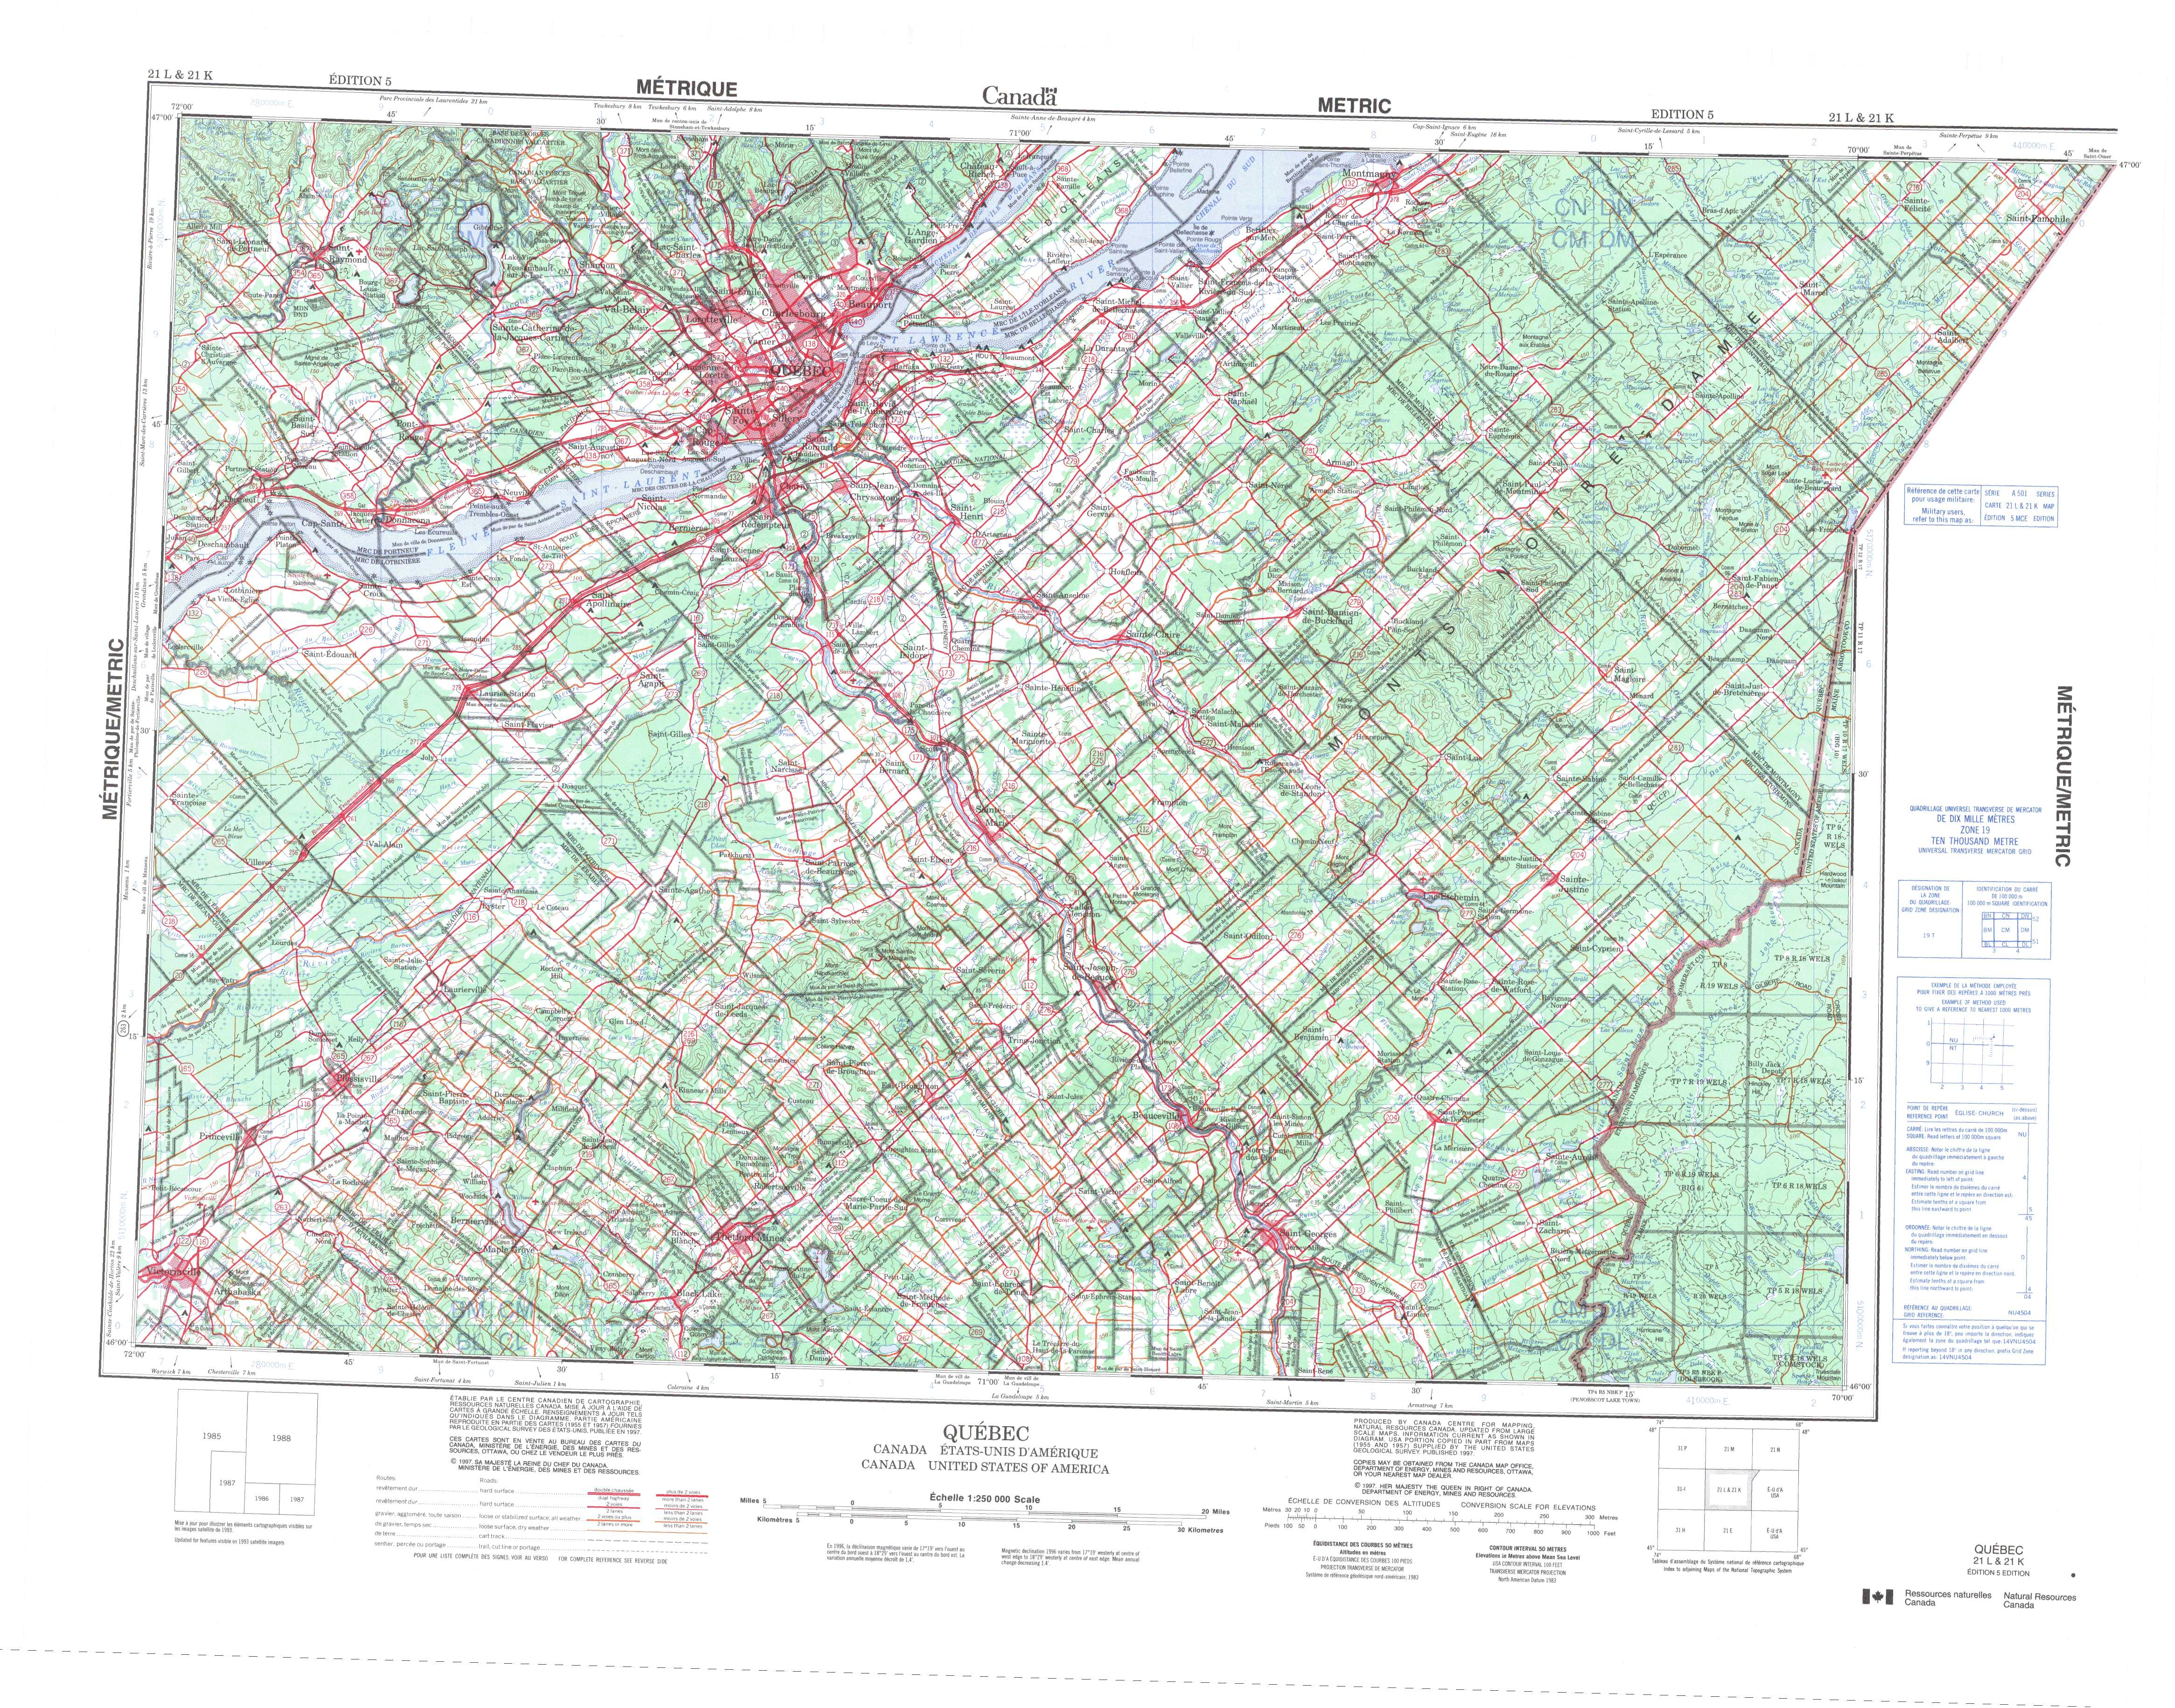 Printable Topographic Map Of Quebec 021L, Qc - Printable Topo Maps